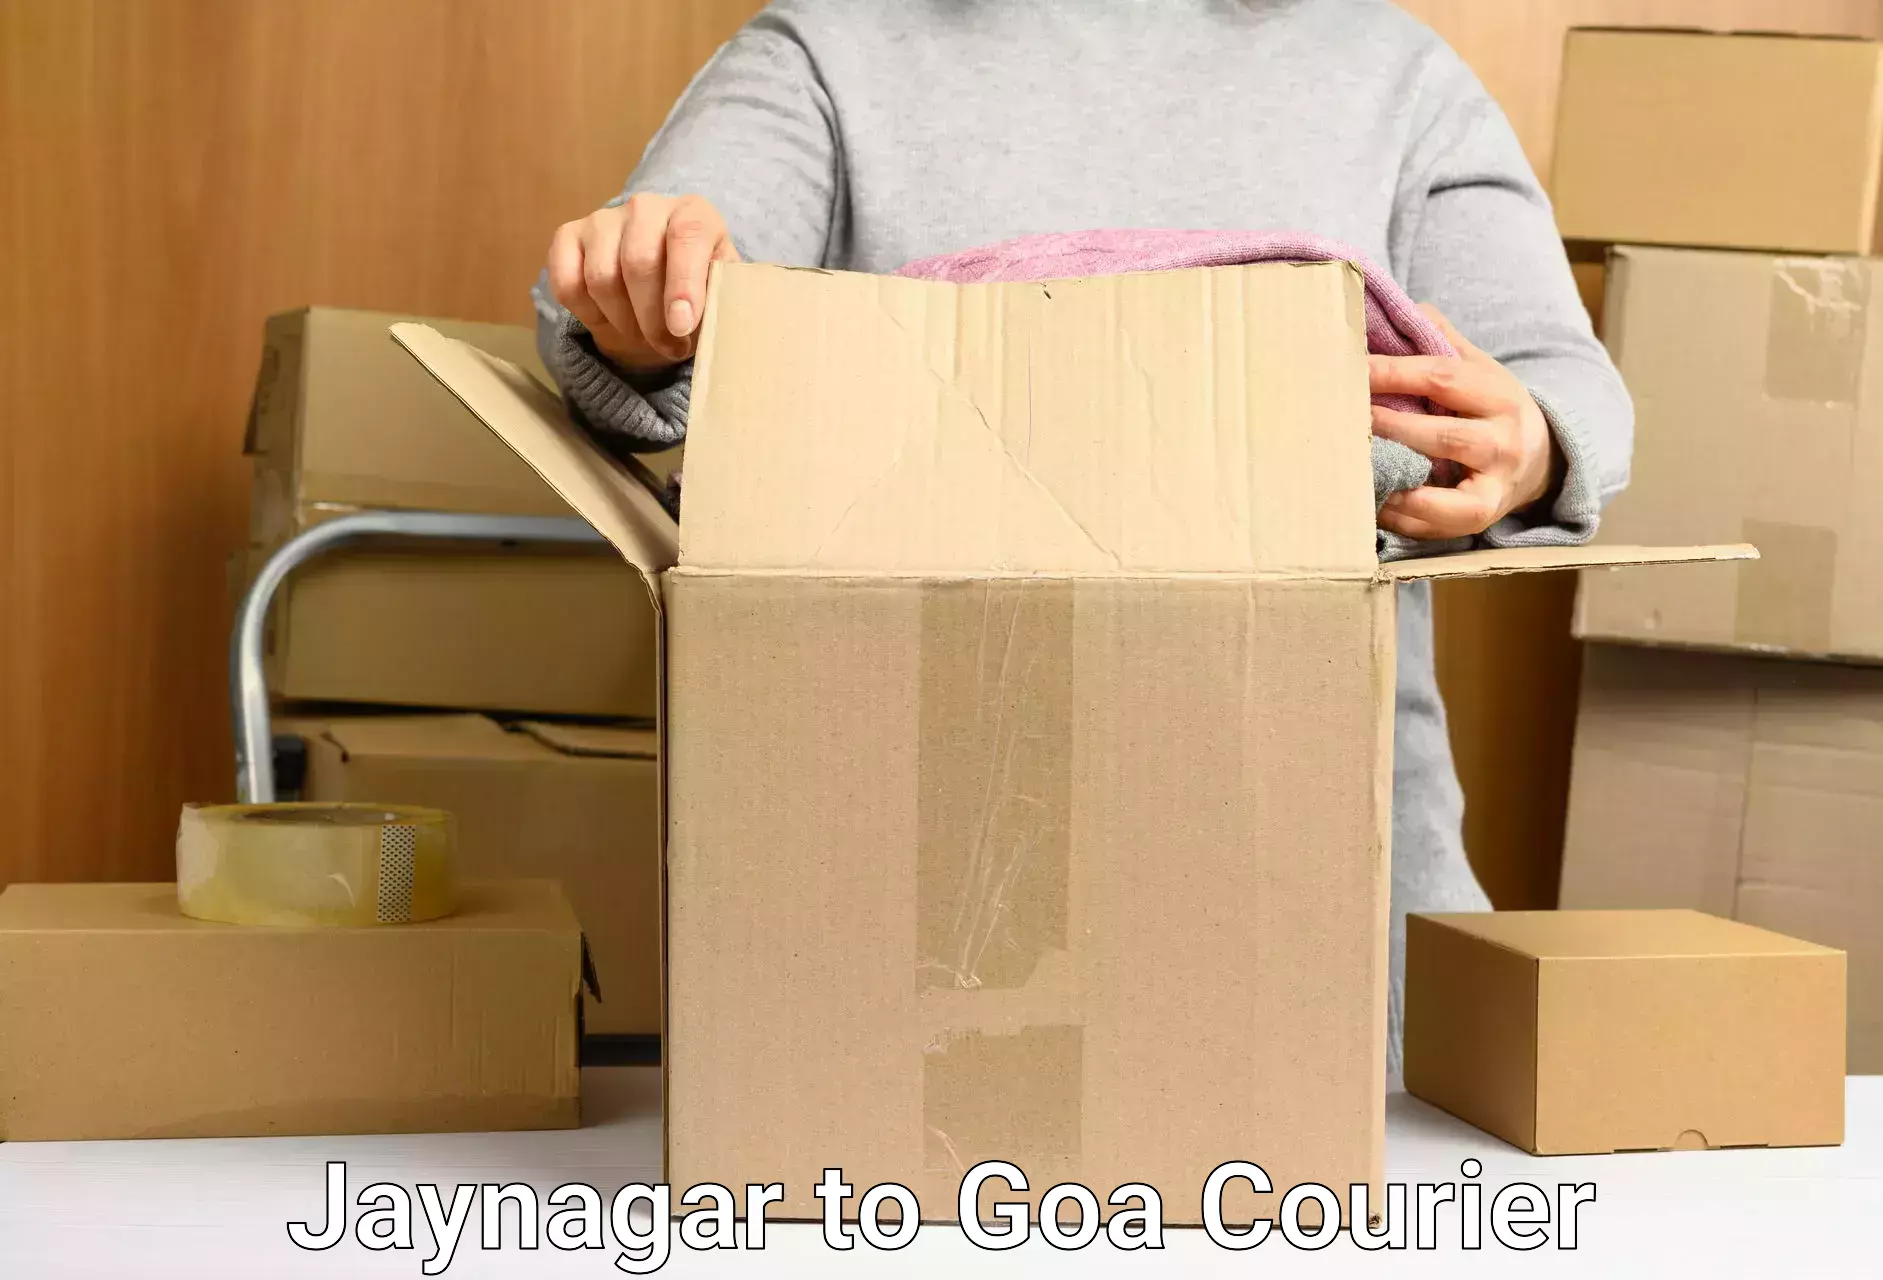 Nationwide delivery network Jaynagar to Vasco da Gama